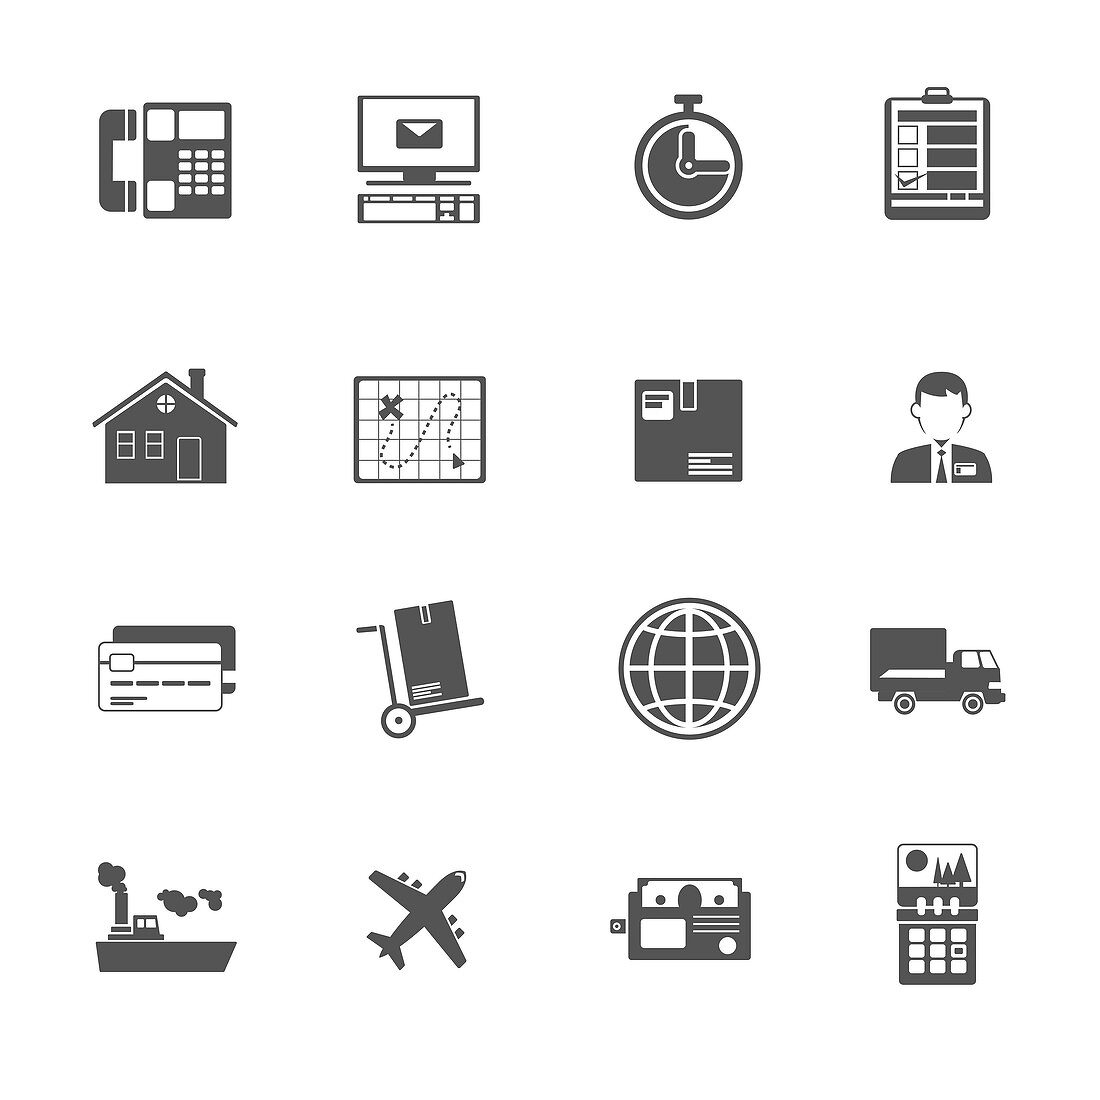 Logistics icons, illustration